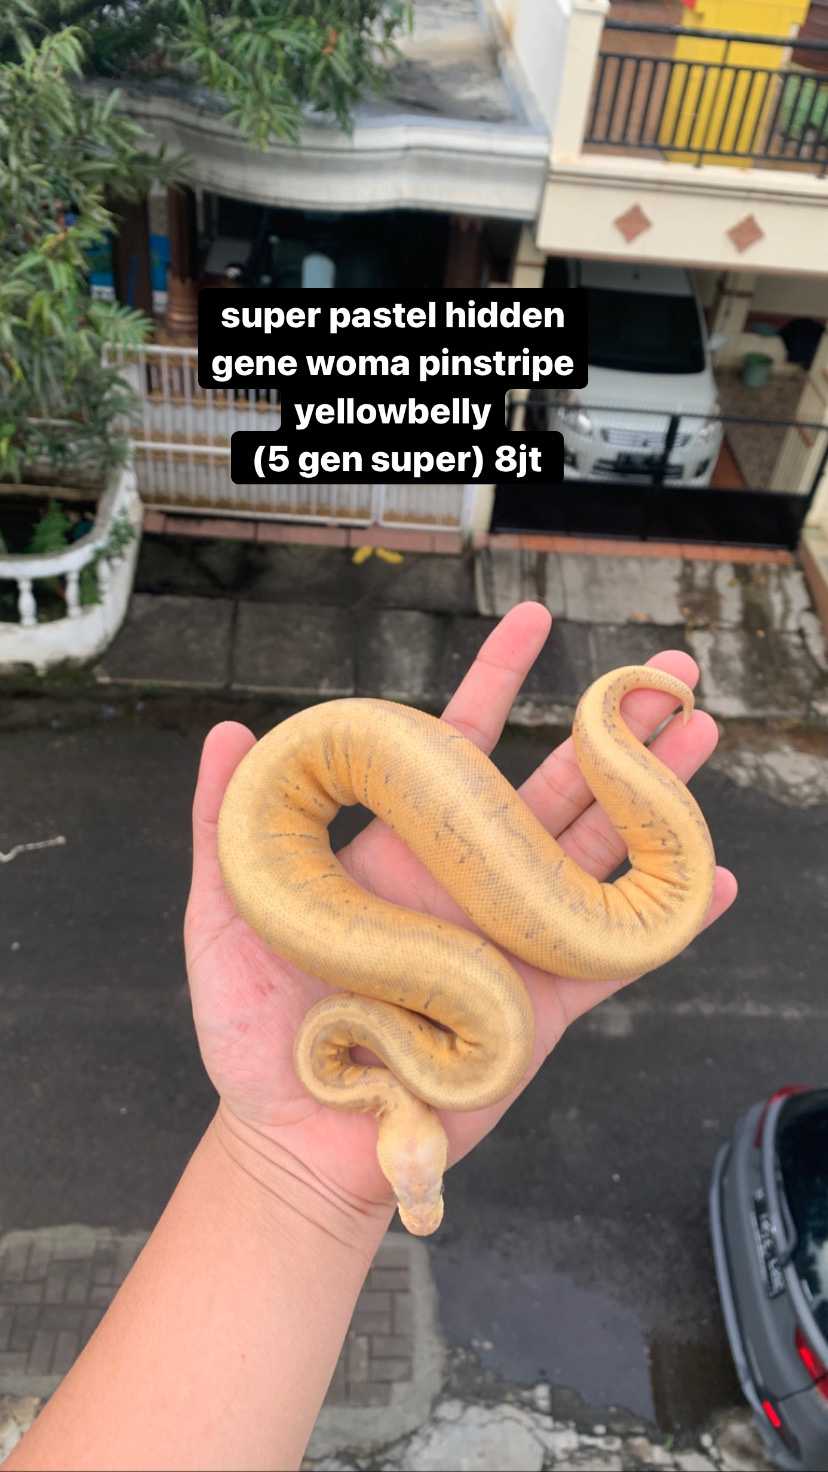 yellowbelly pinstripe super pastel hidden gene woma female ballpython